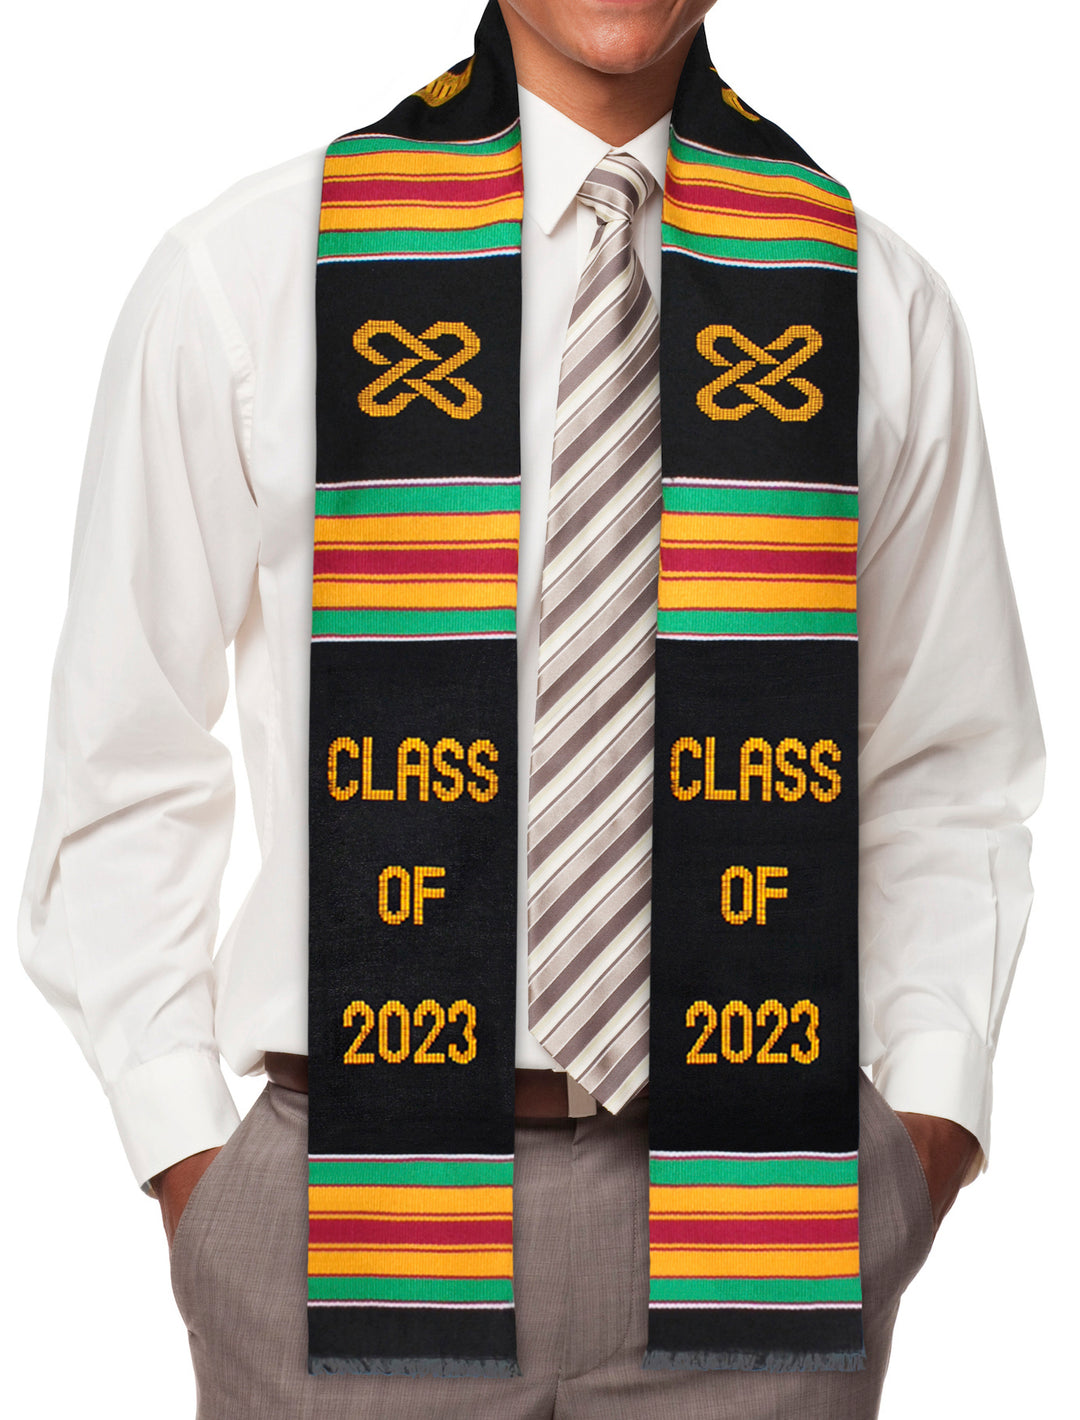 Class of 2023 Kente Graduation Stole with Unity Symbol